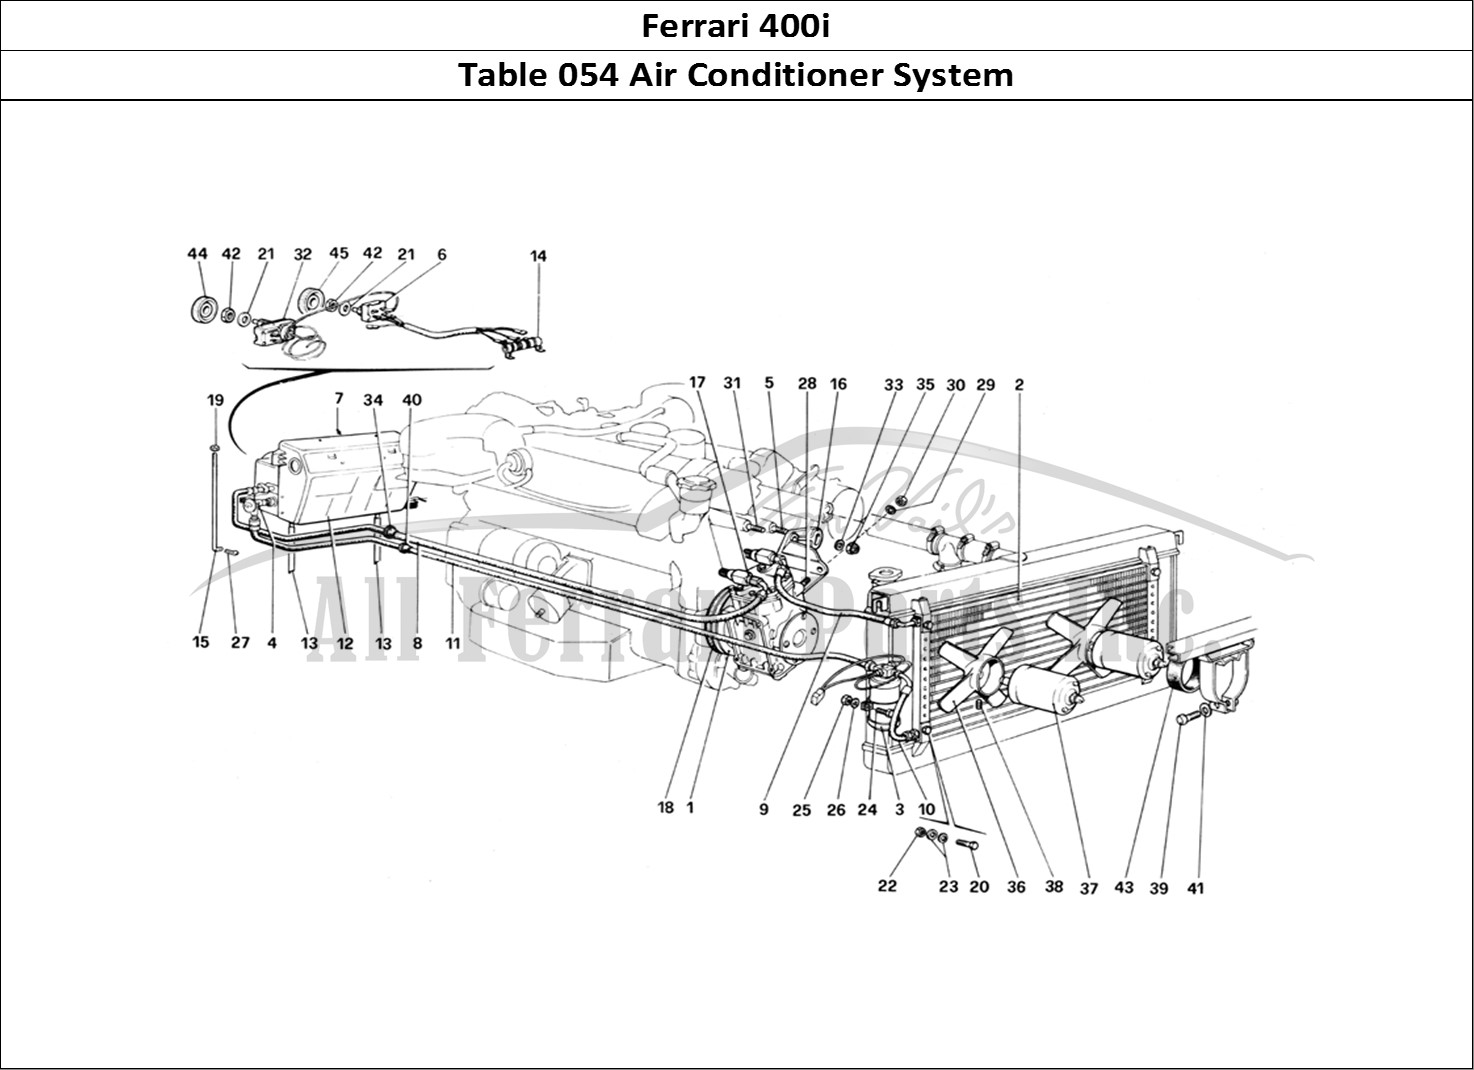 Ferrari Parts Ferrari 400i (1983 Mechanical) Page 054 Air Conditioning System